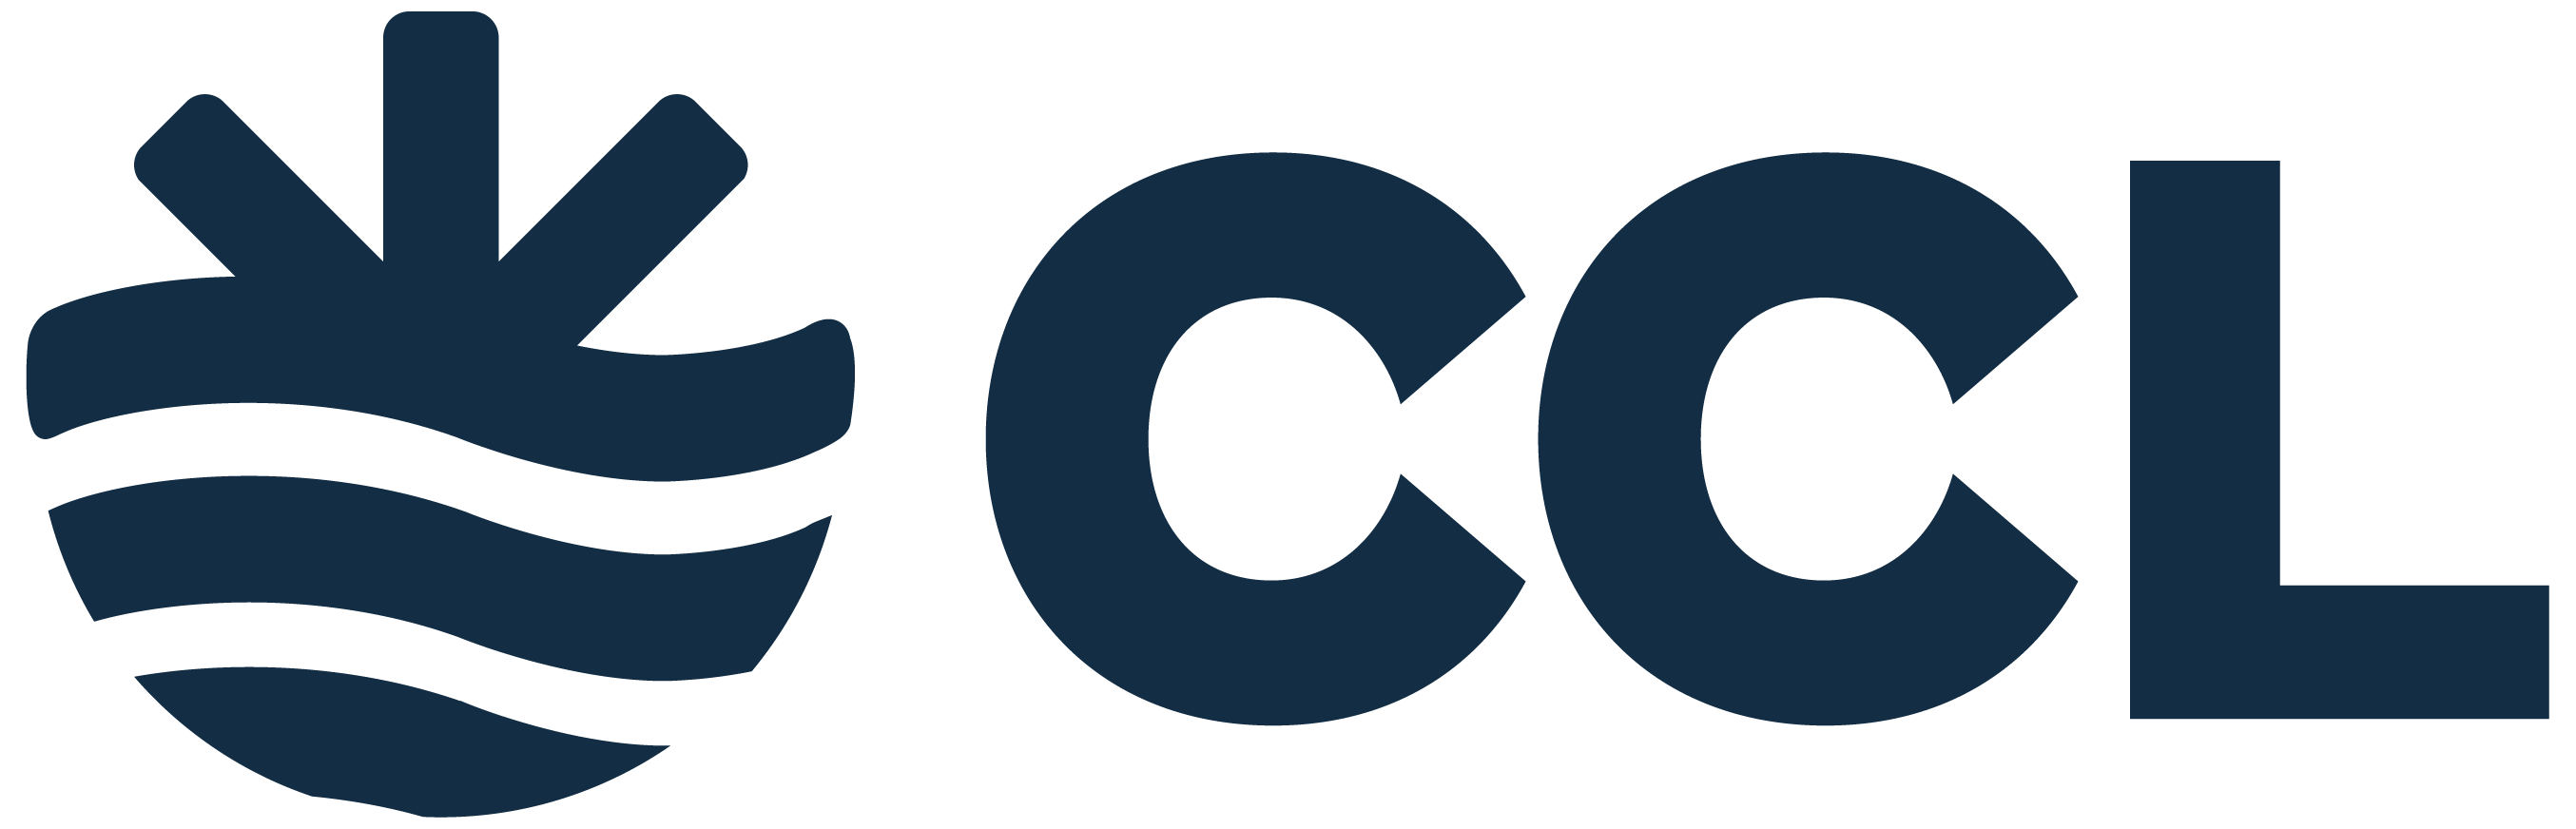 CCL_logo assets_CCL_FullLogo_navy